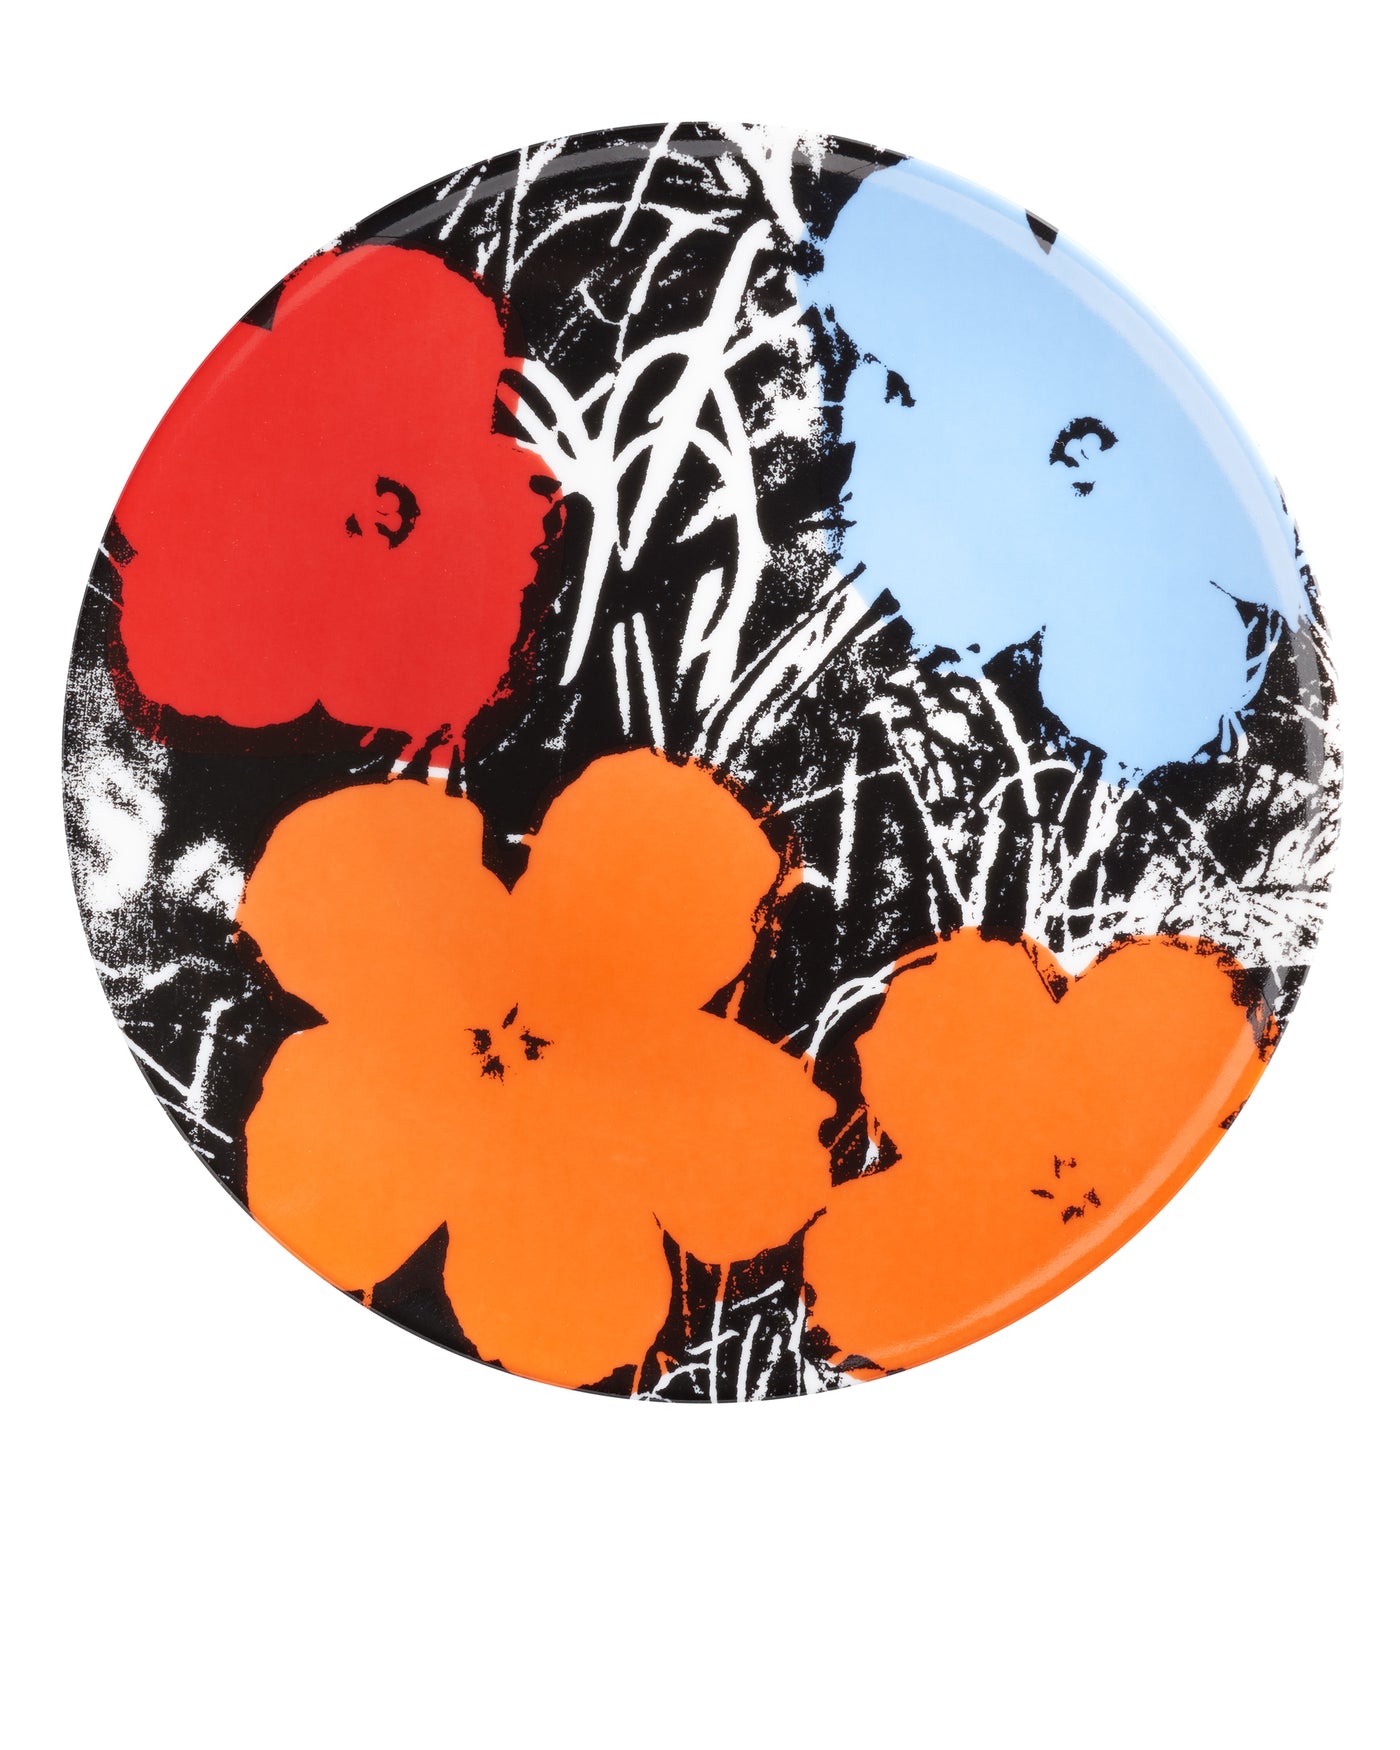 Andy Warhol Plate Flower Blue/Orange/Red